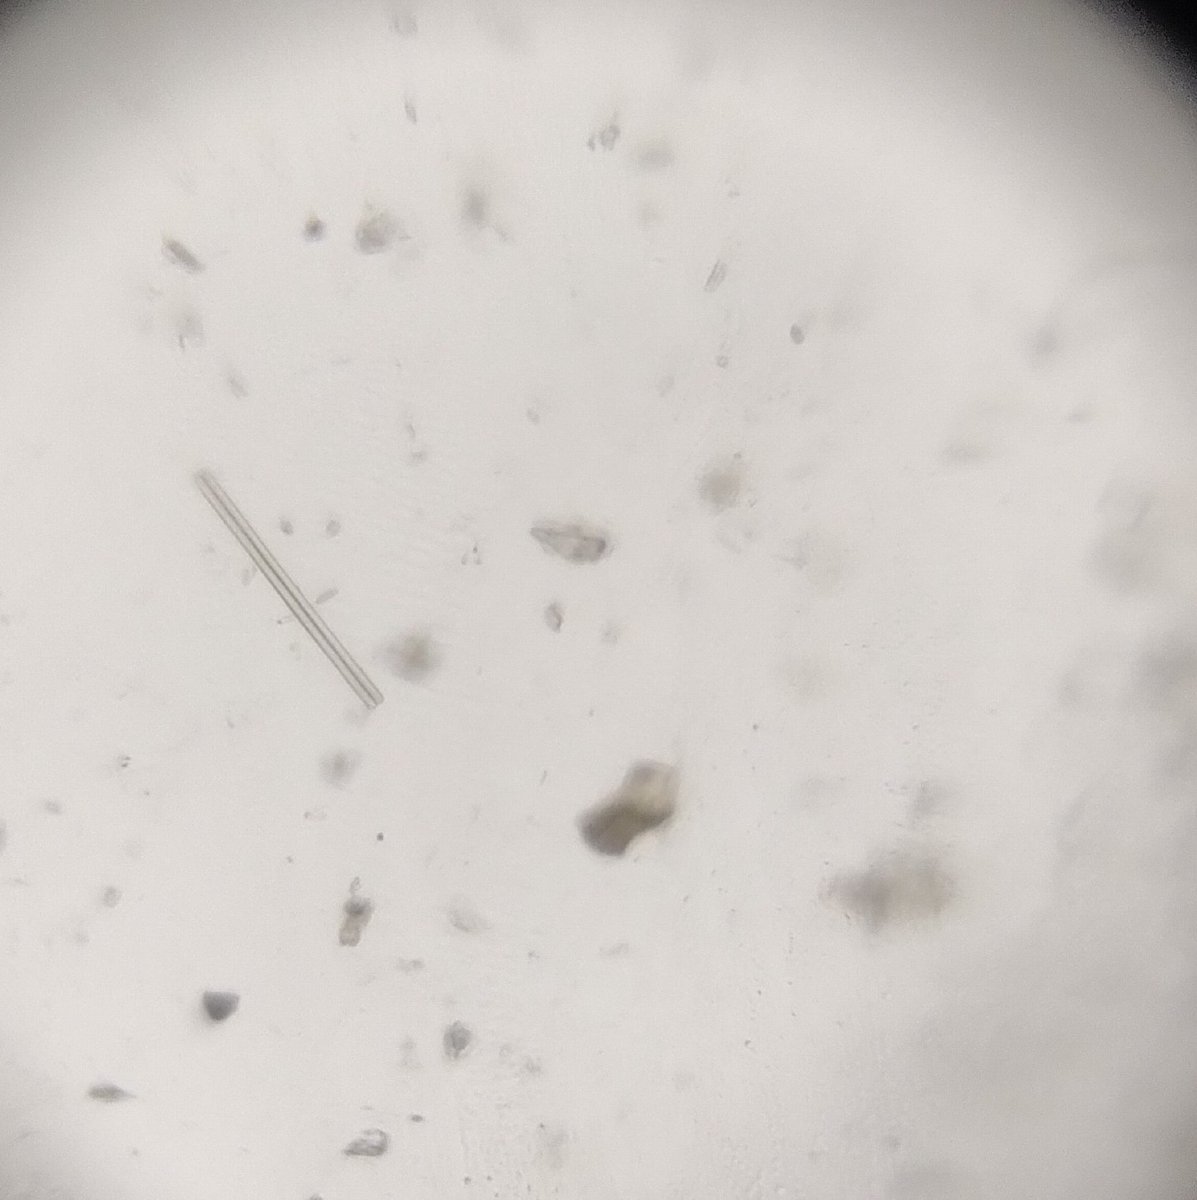  image of diatoms